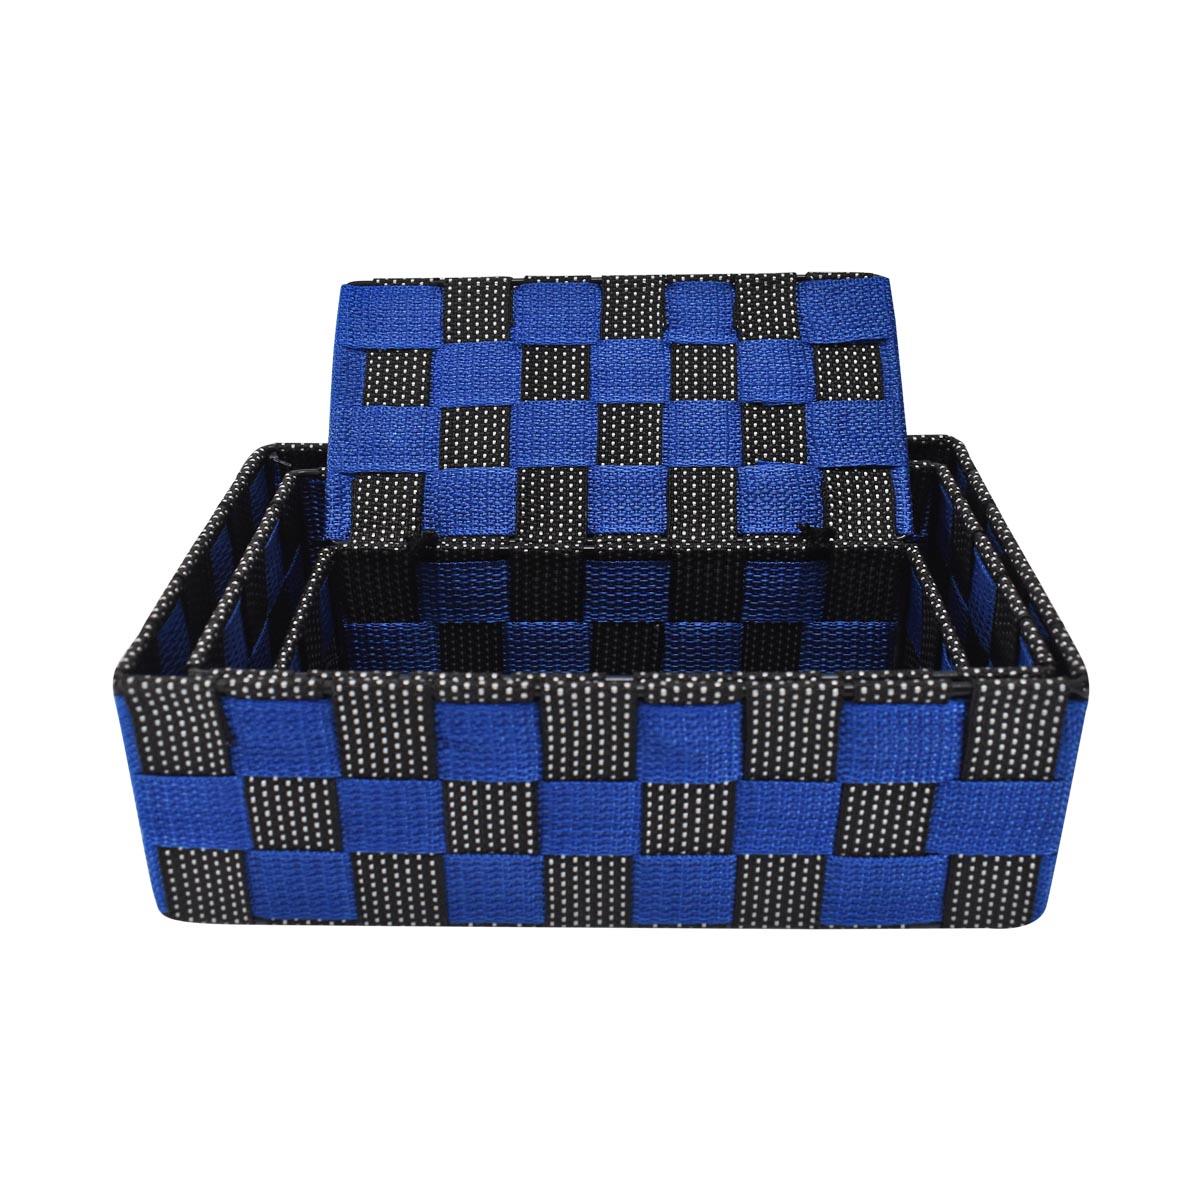 Woven Storage Organizer Nylon Basket Set of 3 Tote Bins (32-4935)